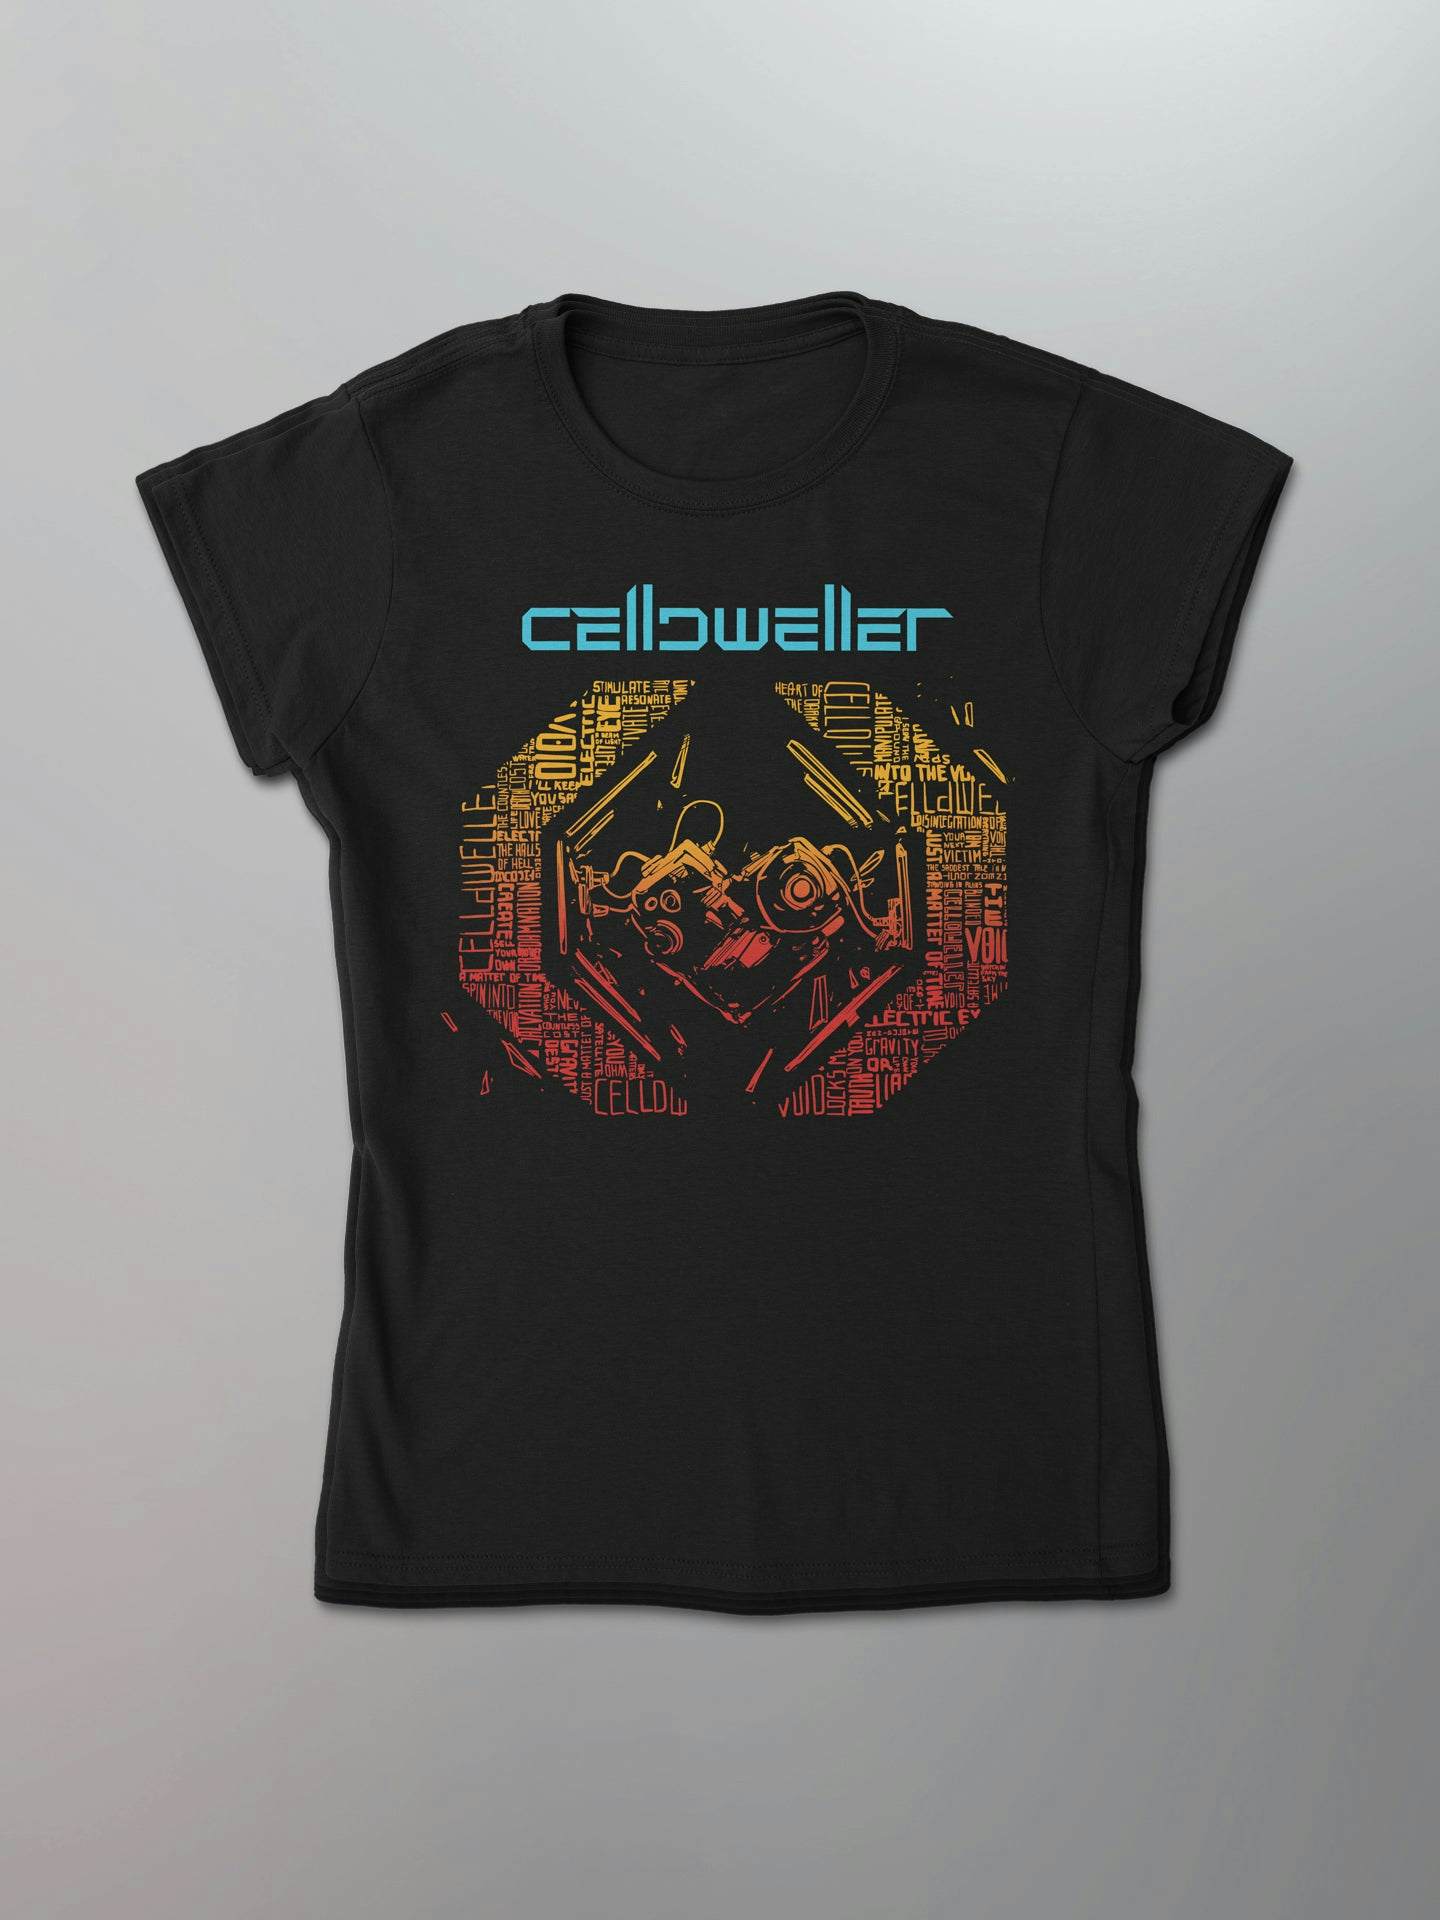 celldweller shirt and bands